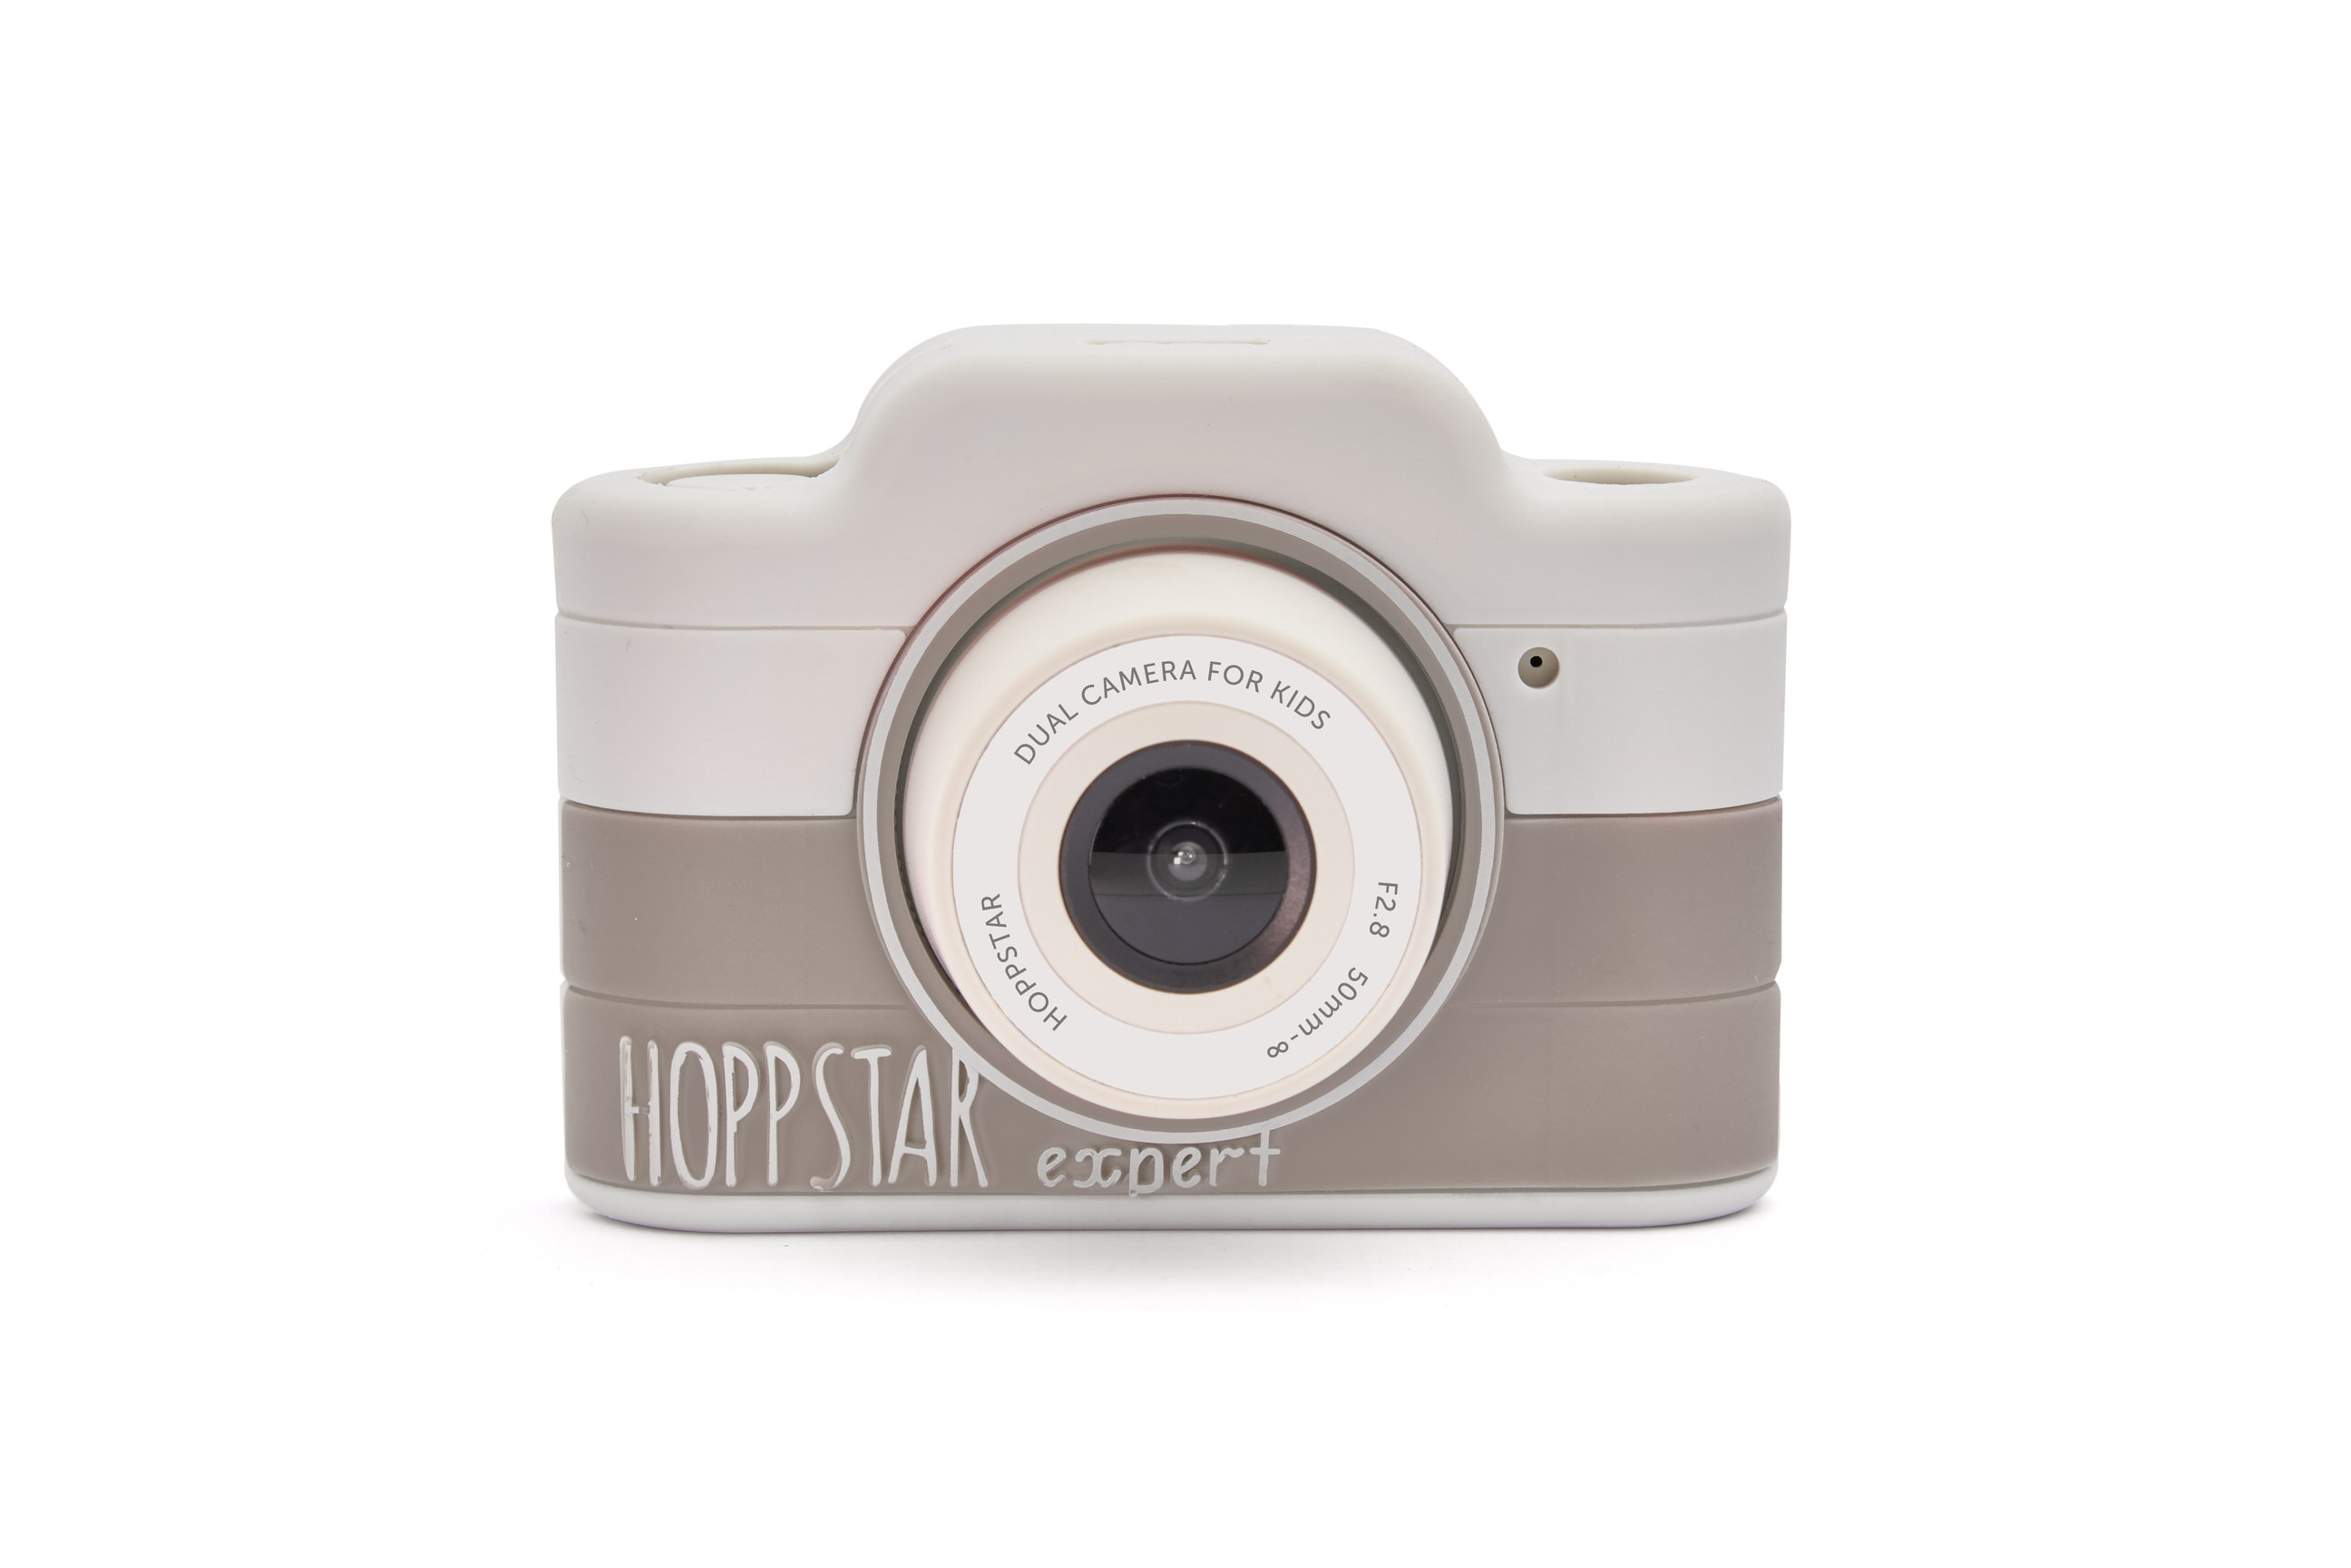 Hoppstar Expert Kamera mit Siena (braun/weiß) Silikonhülle, Frontalansicht